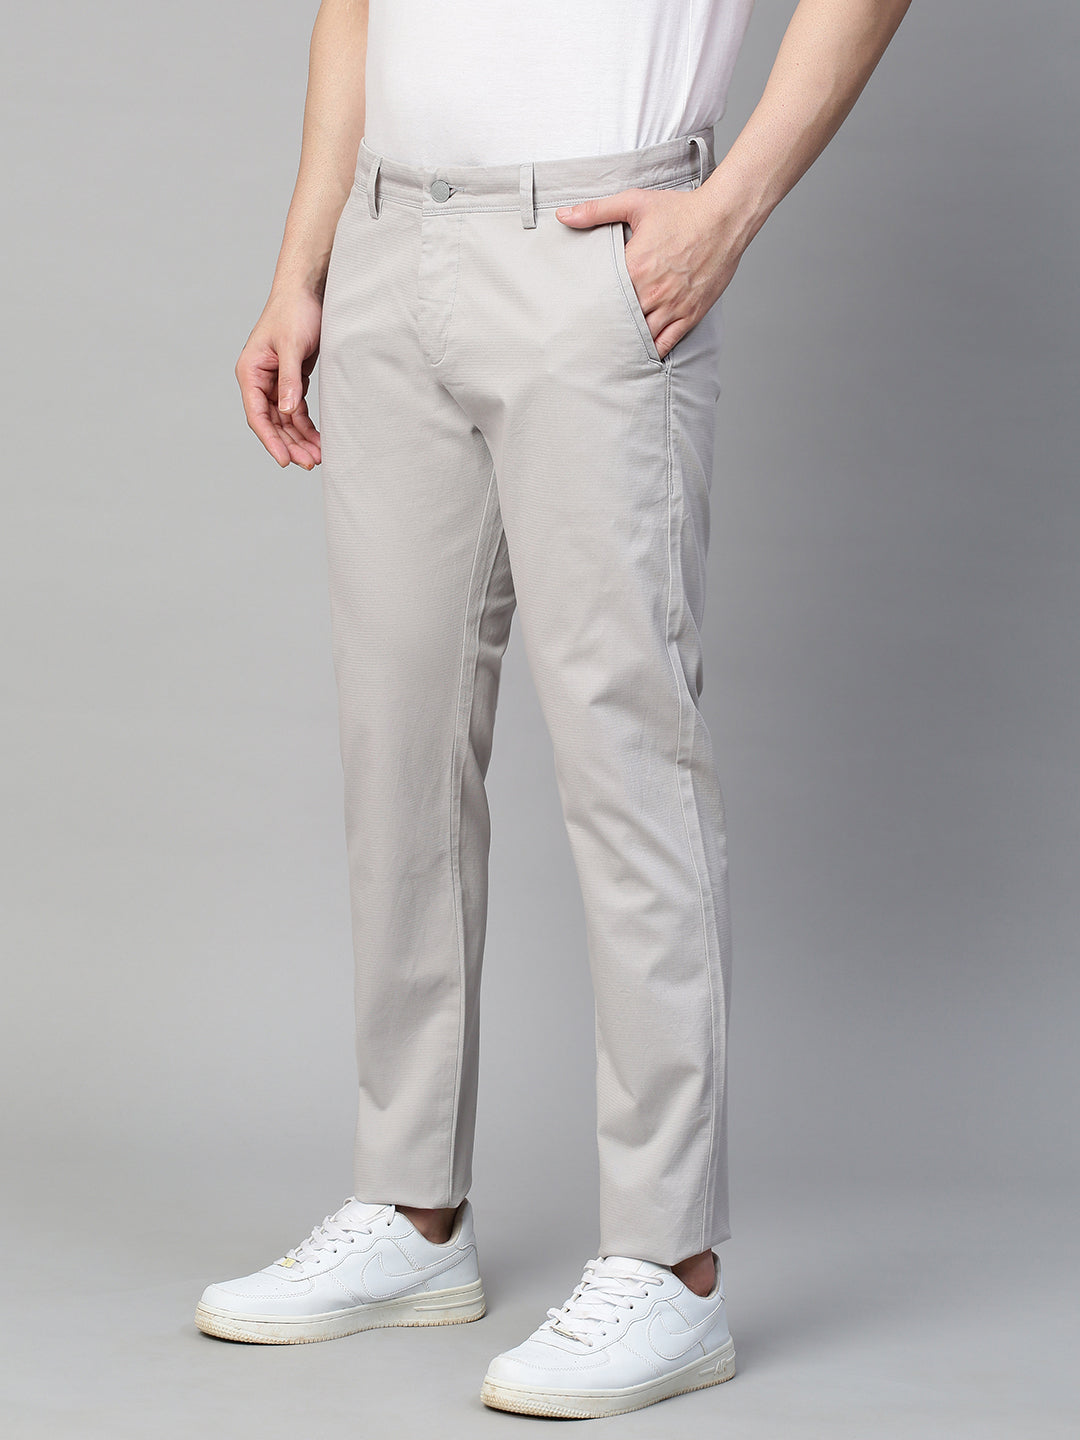 Genips Men's Light Grey Cotton Stretch Caribbean Slim Fit Solid Trousers